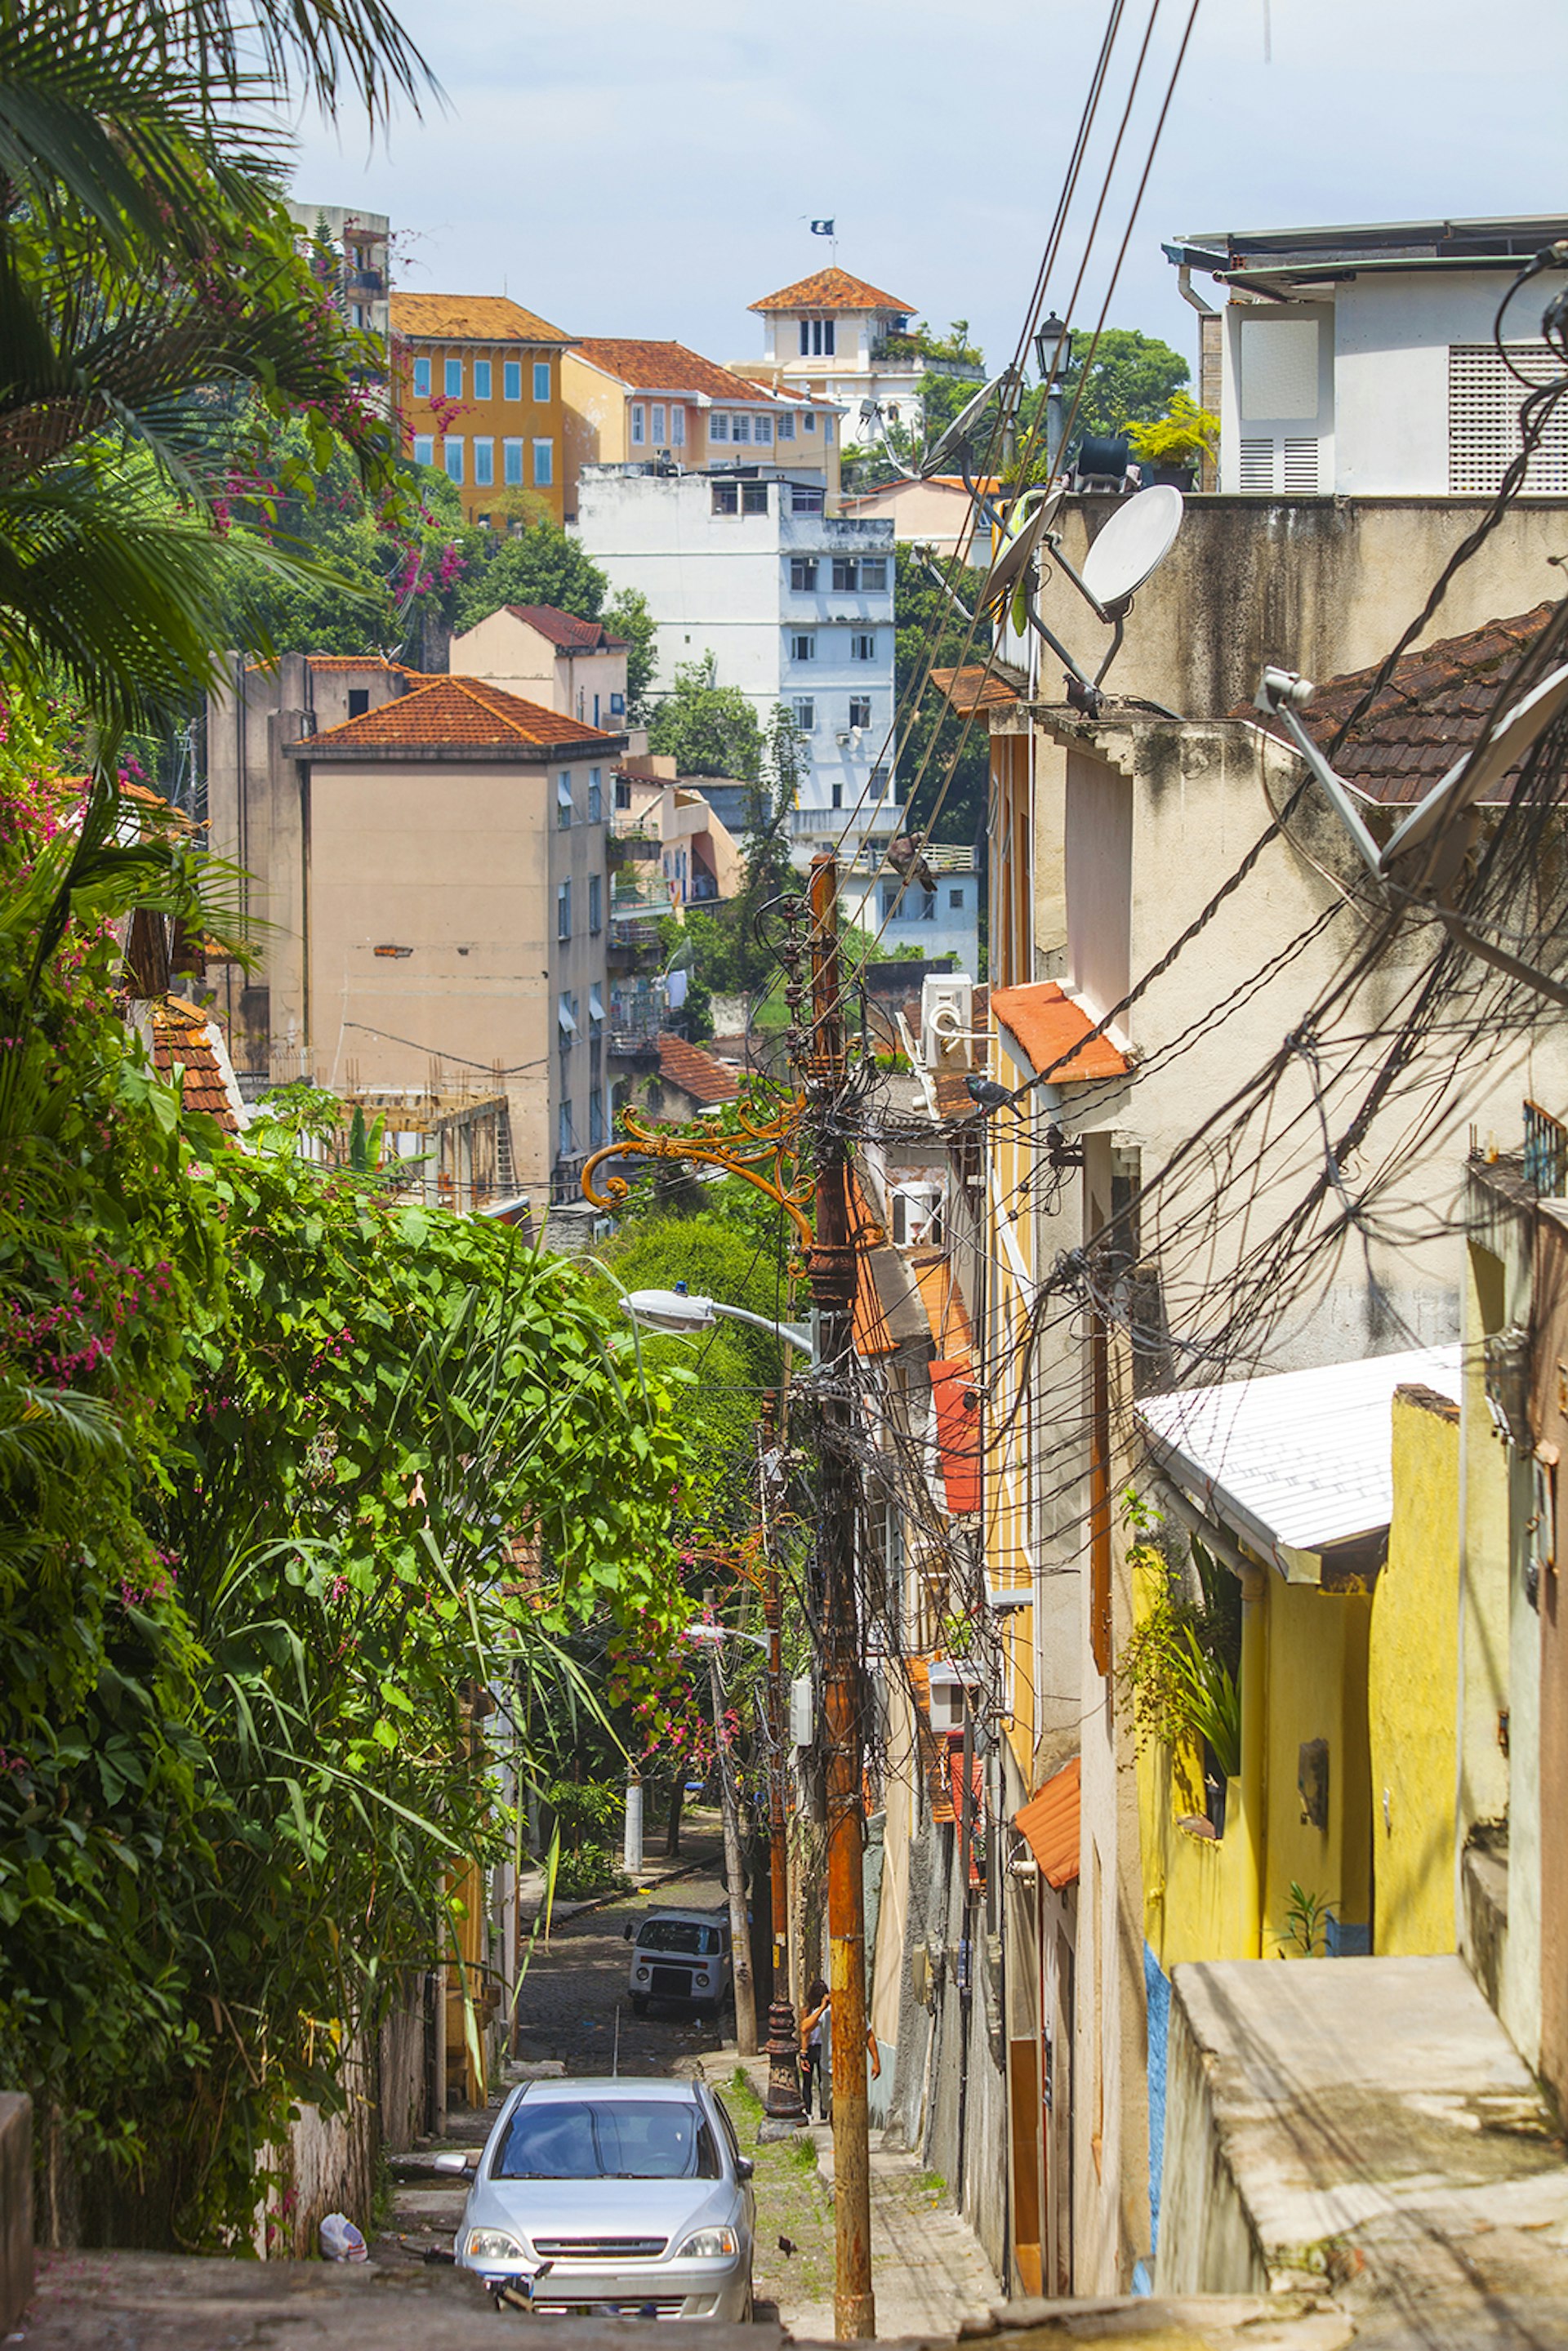 A view of the Santa Teresa neighborhood from the top of a hill in Rio de Janiero, Brazil